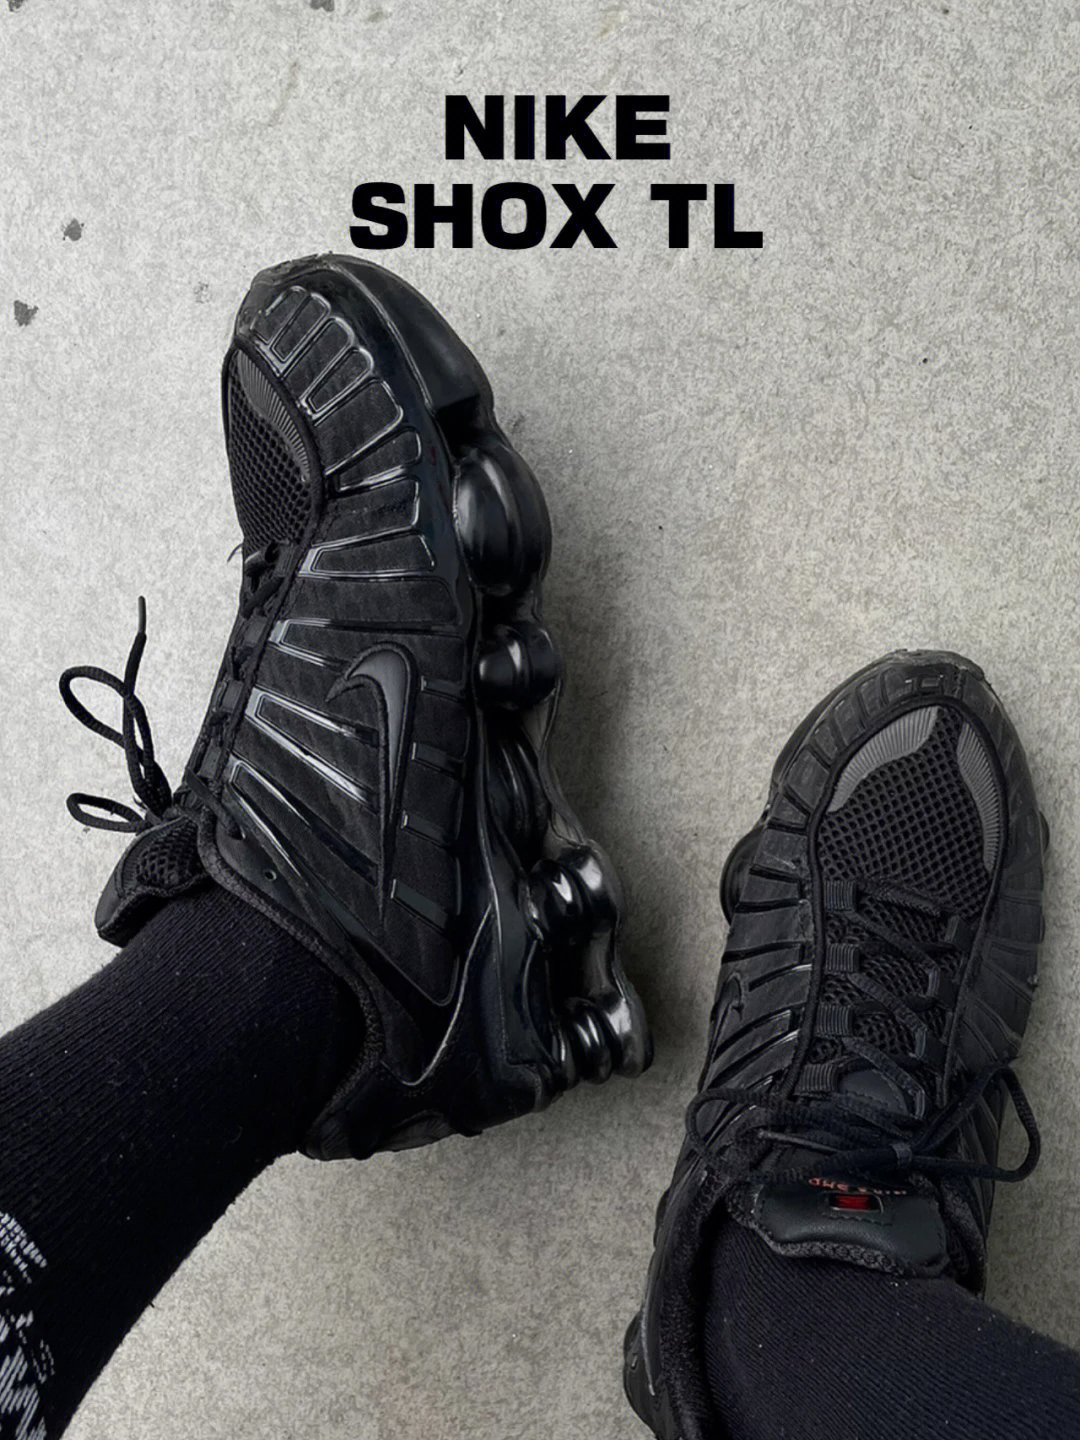 Item Thumbnail for N1ke Shox TL 2019 "Metallic Silver" 13 full-length atmospheric column jogging shoe, size 36-46